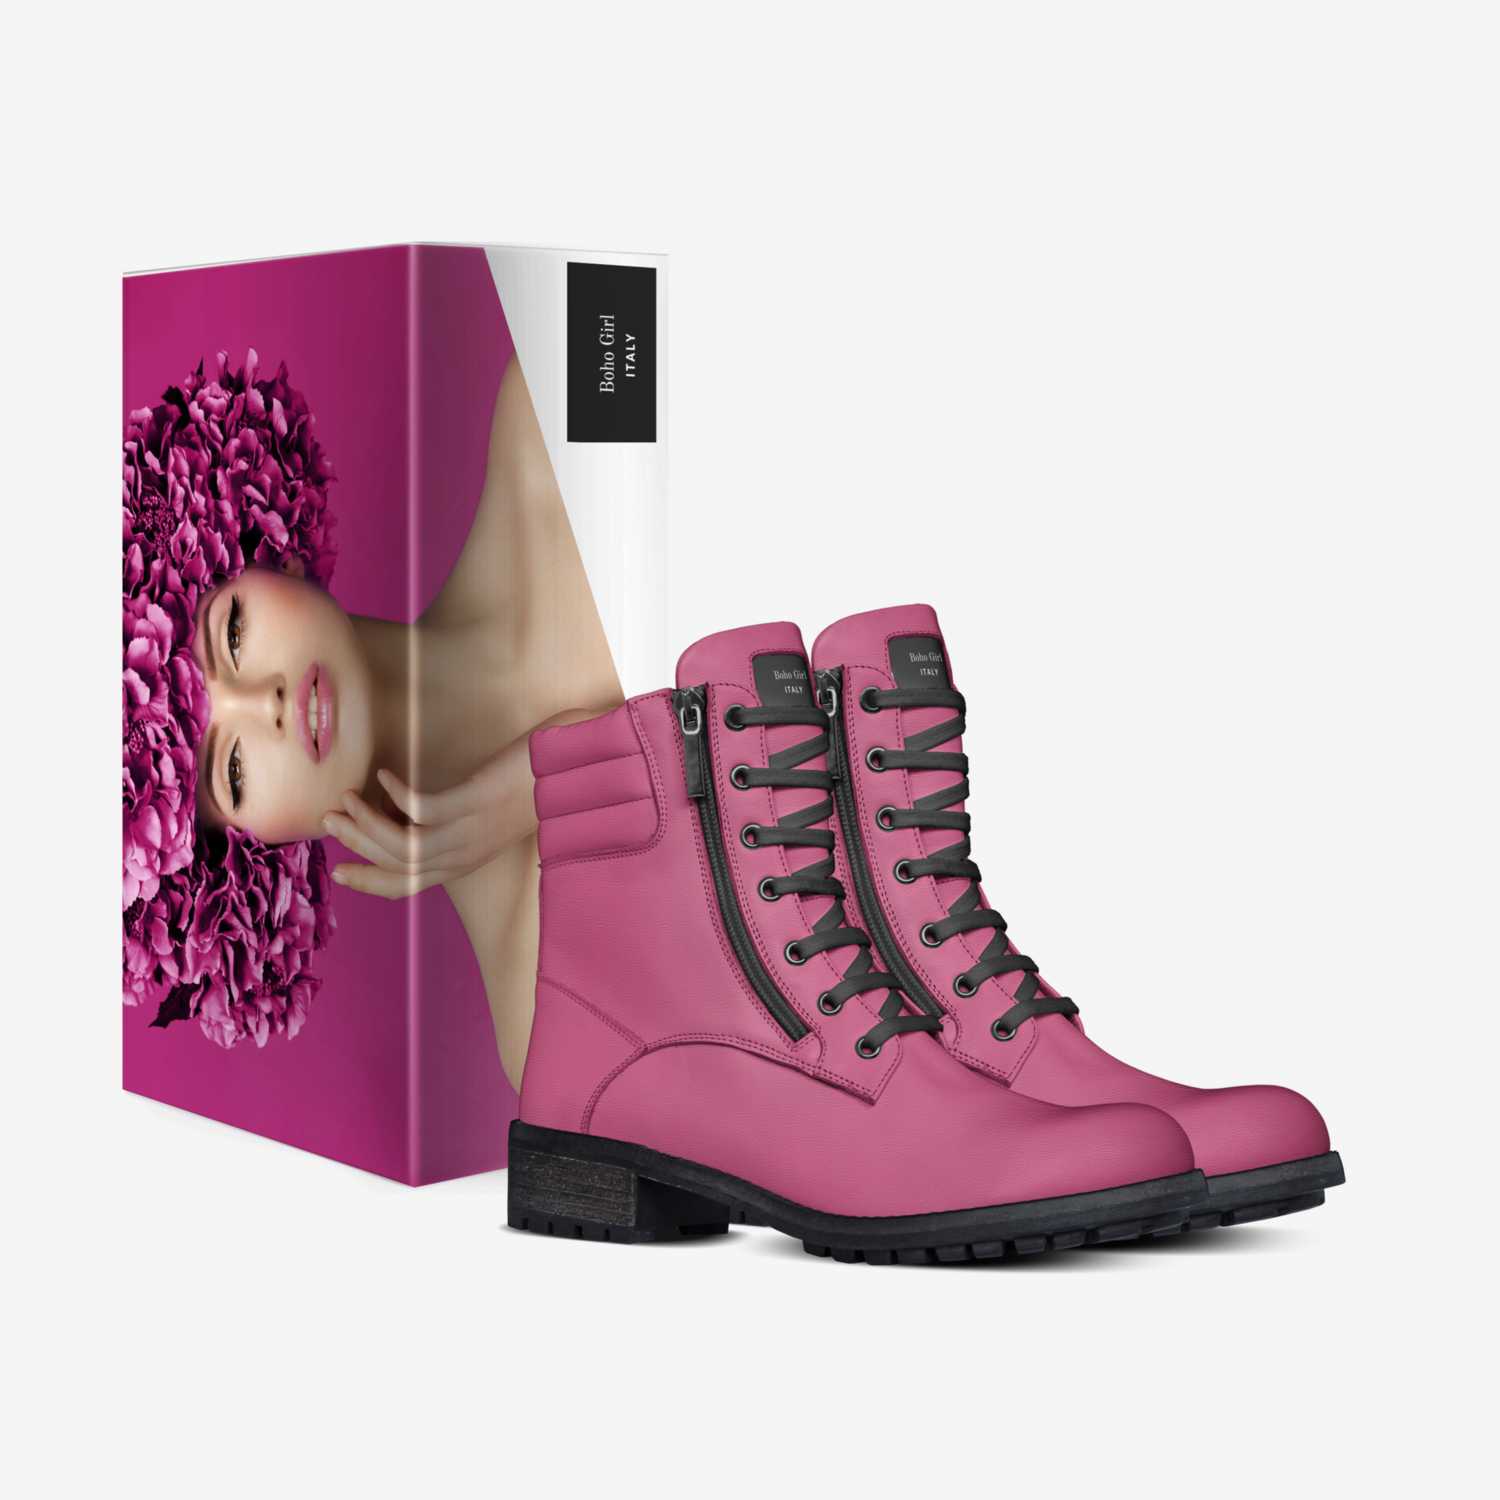 Boho Girl custom made in Italy shoes by Marijke Verkerk | Box view